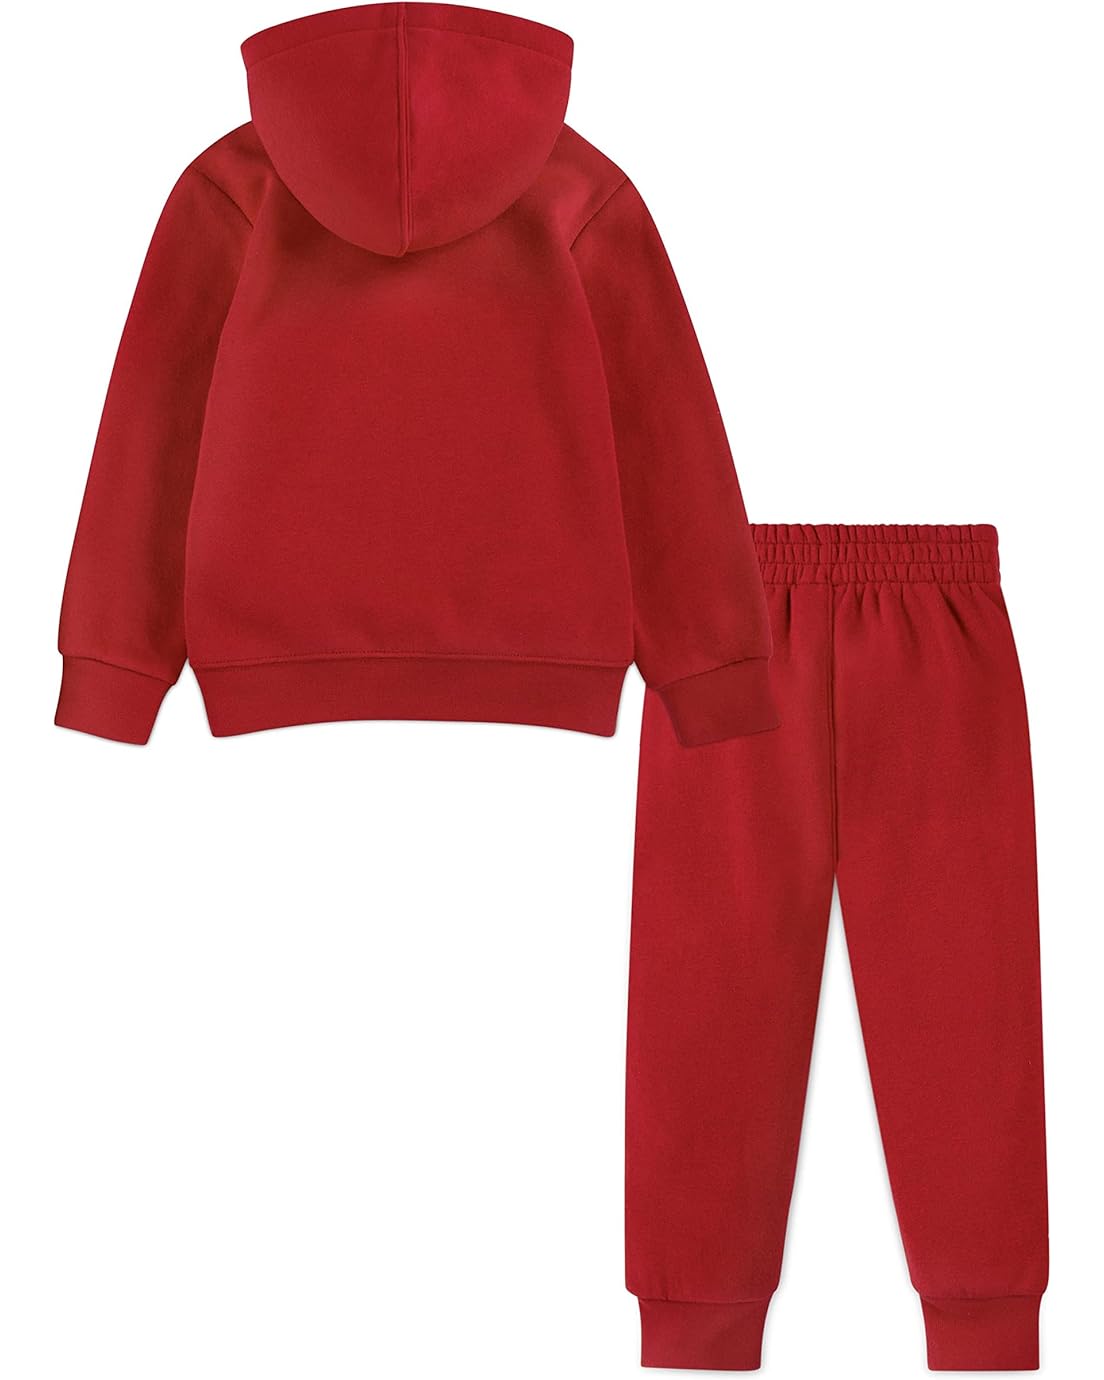  Jordan Kids Essential Pullover Set (Toddler)